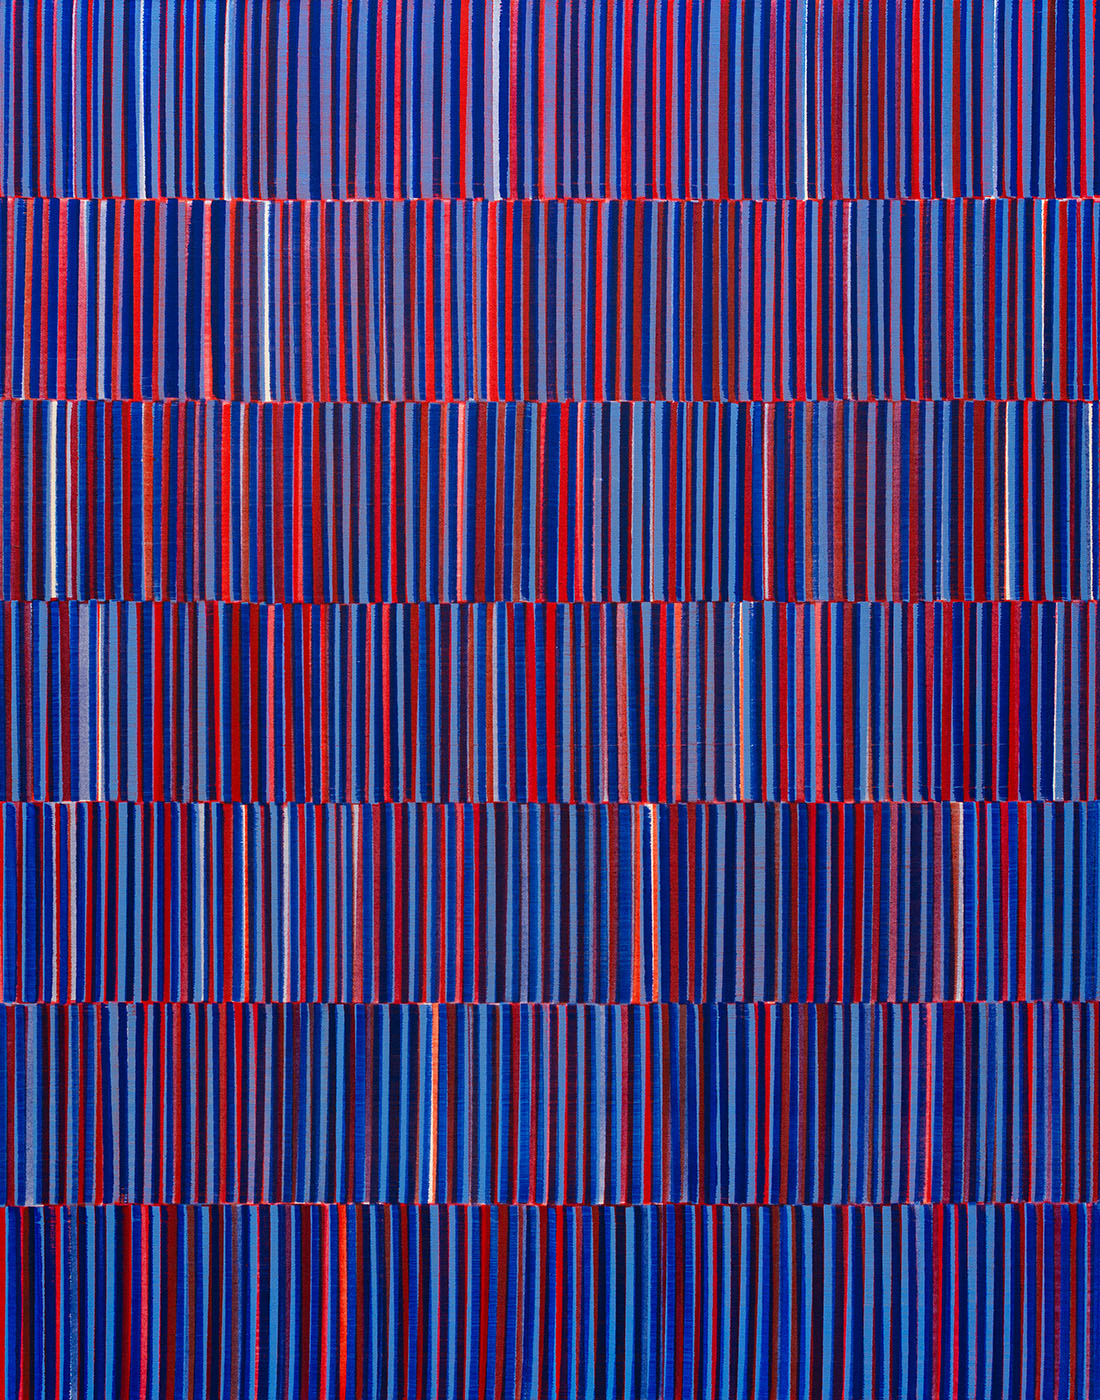 Nikola Dimitrov, FarbKlang BlauRot II, 2019, Pigmente, Bindemittel auf Leinwand, 140 × 110 cm